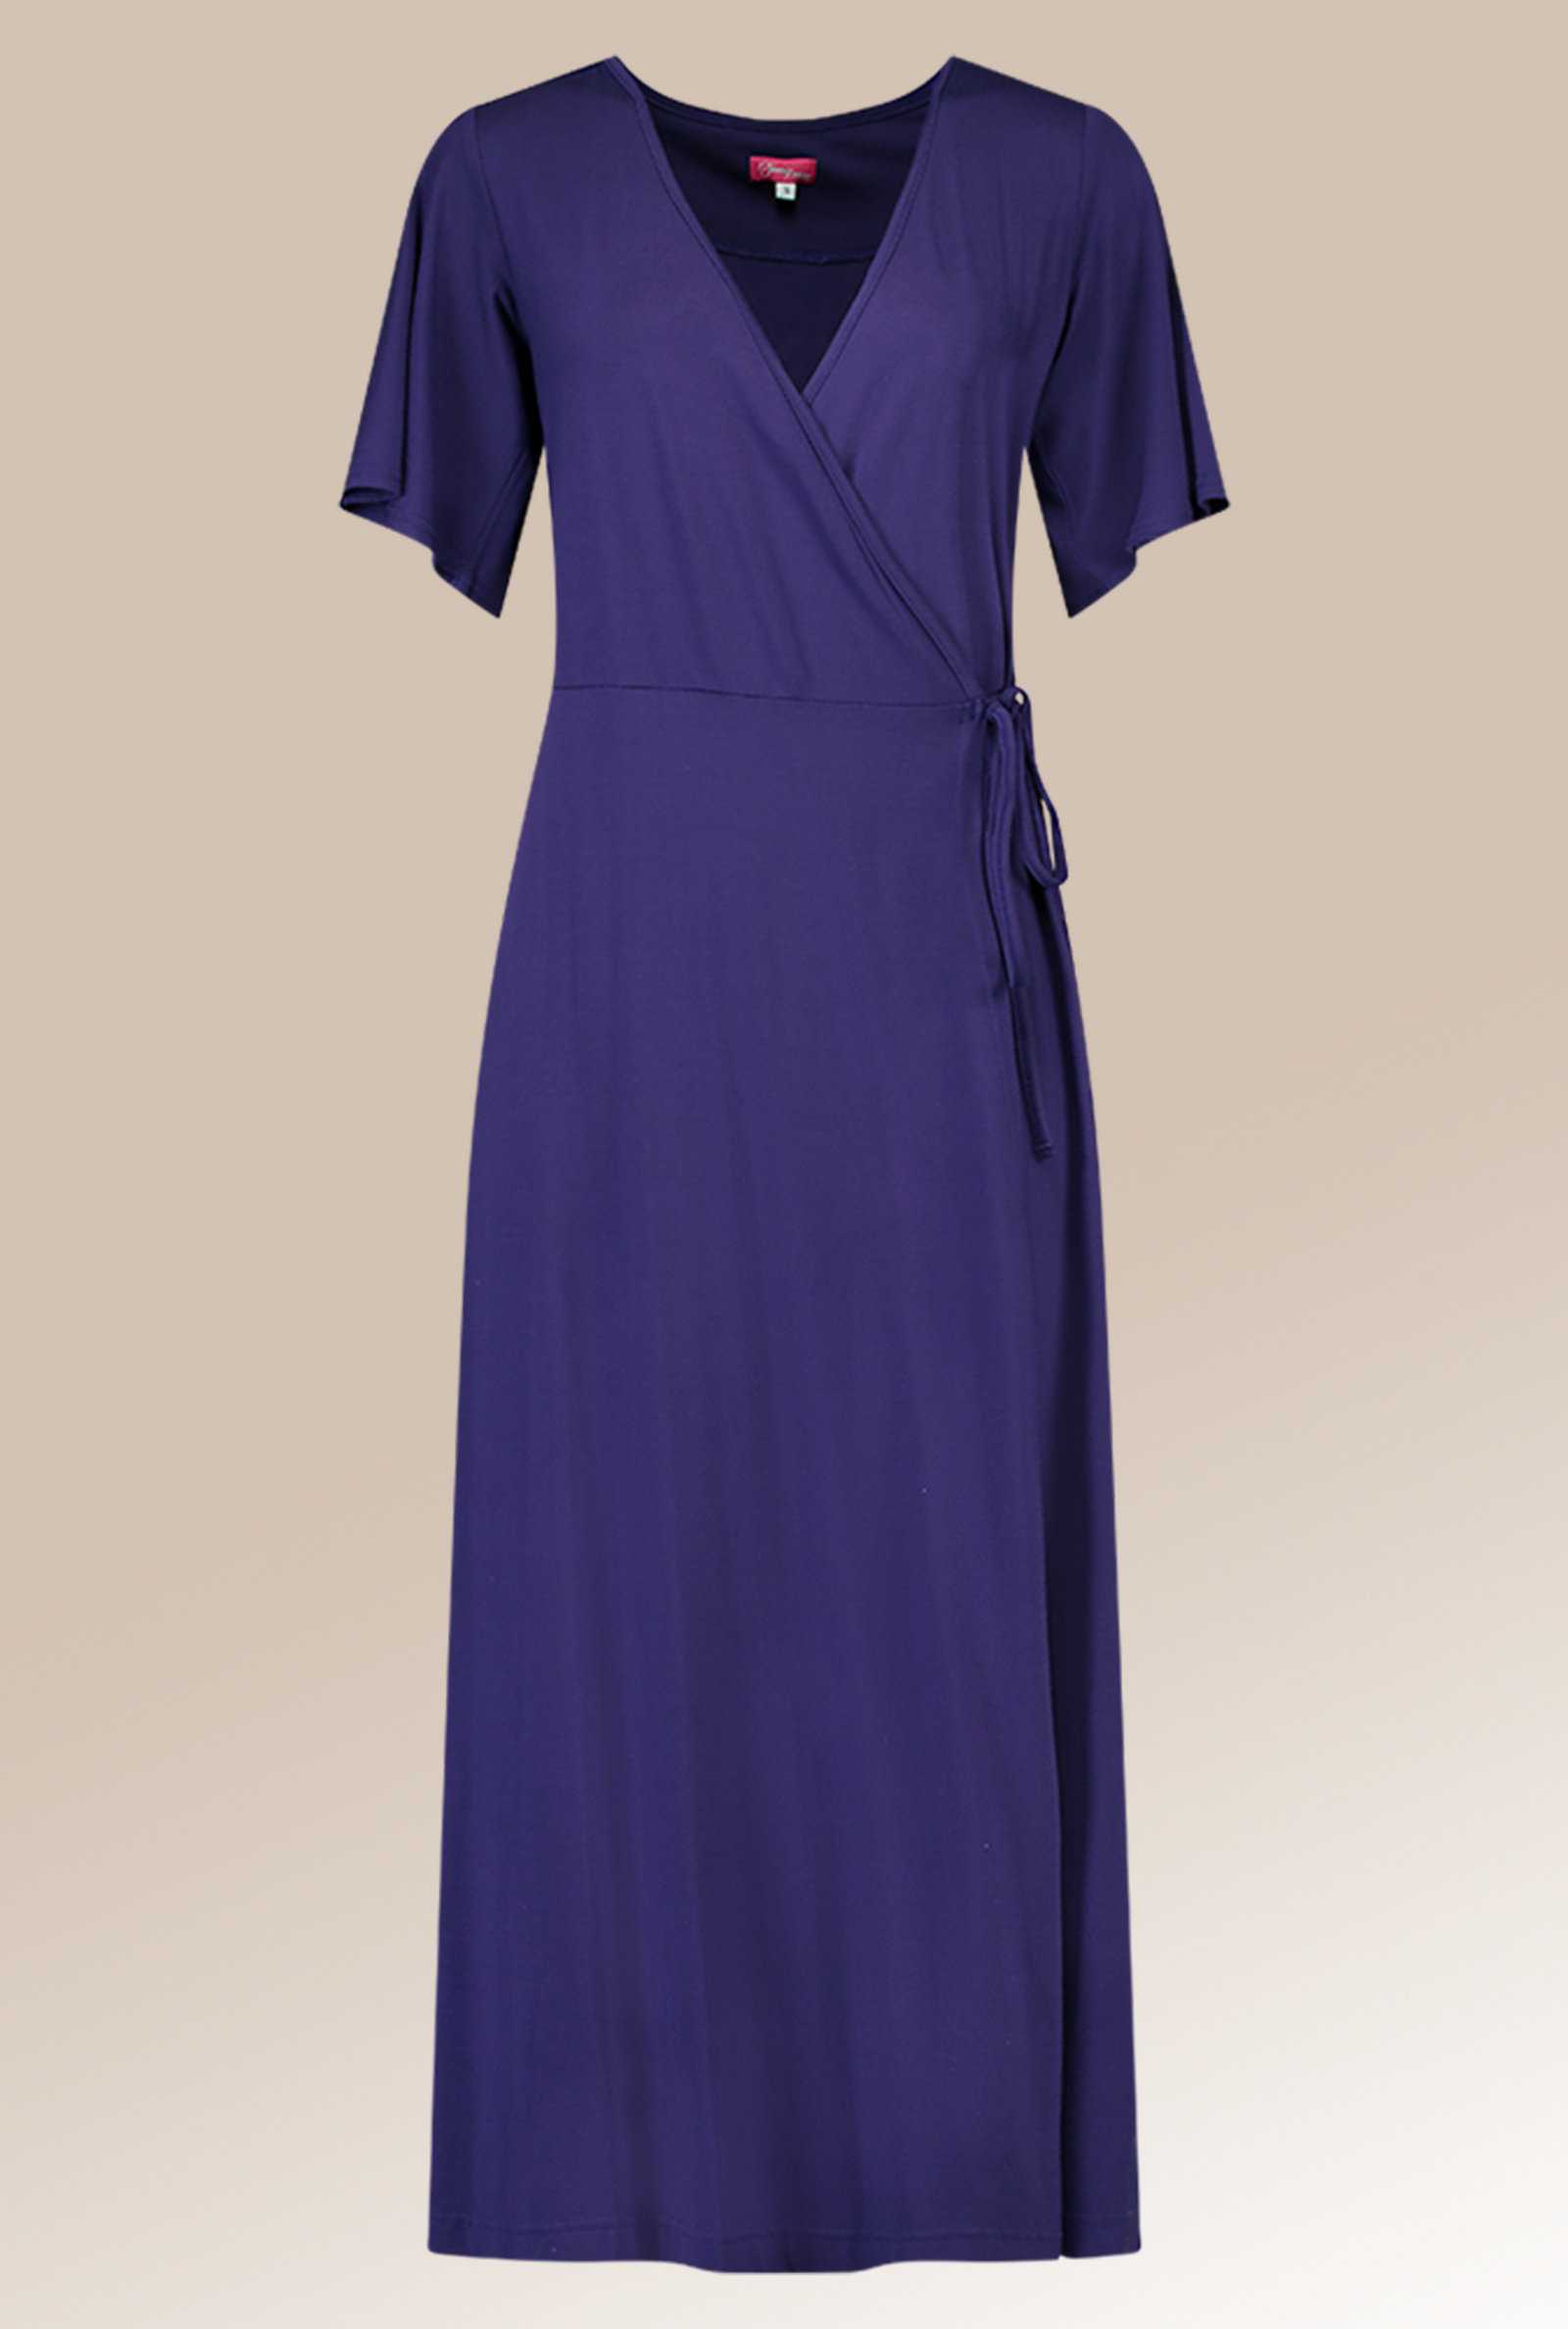 Dress Aline Long Bamboo Purple